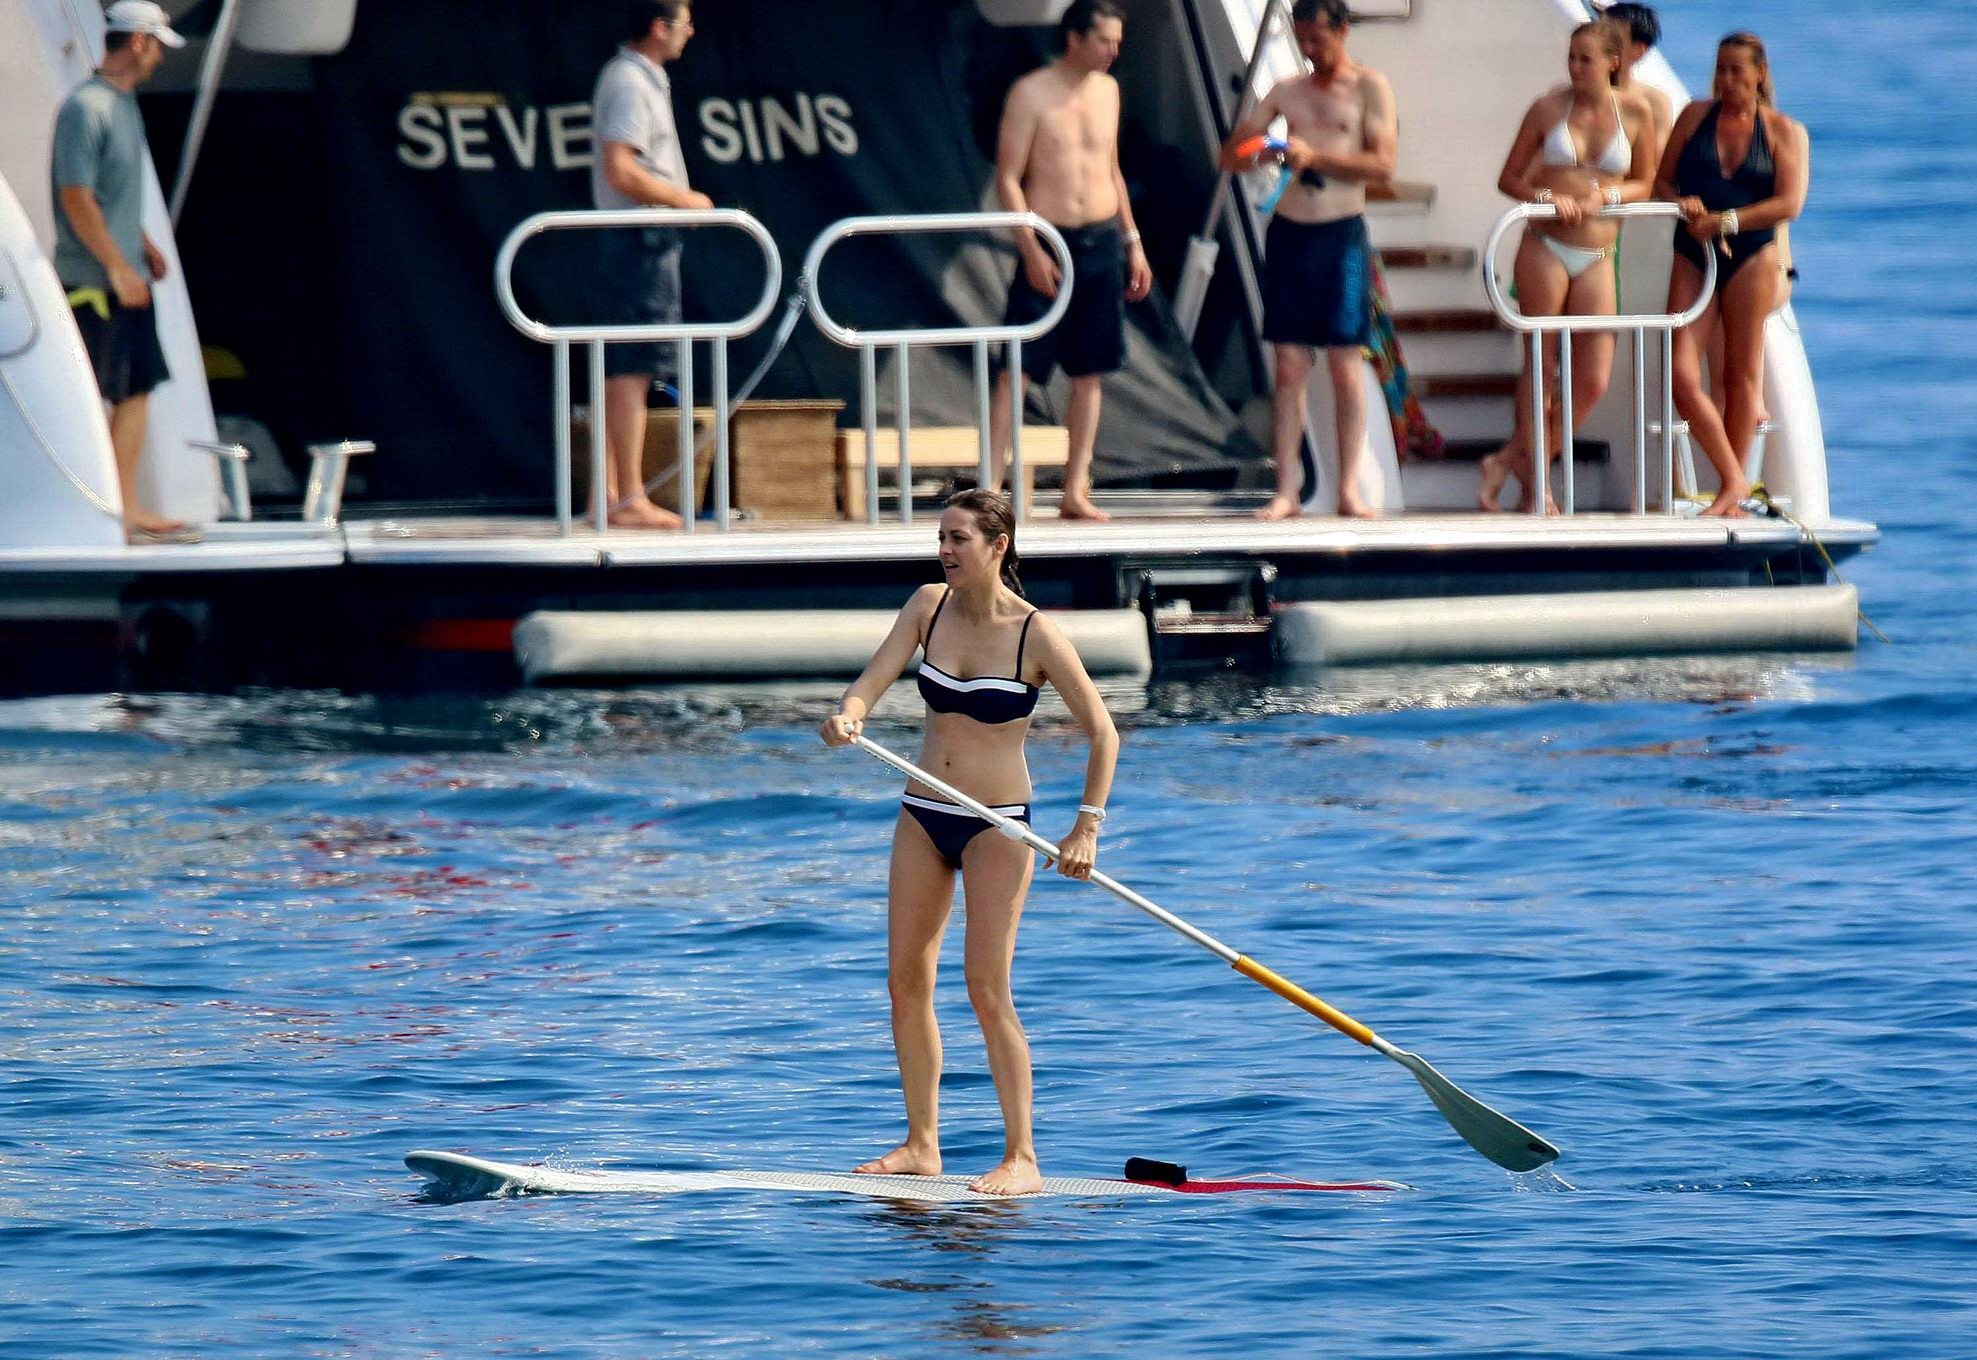 Marion Cotillard paddle boarding in a twotoned bikini #75188354